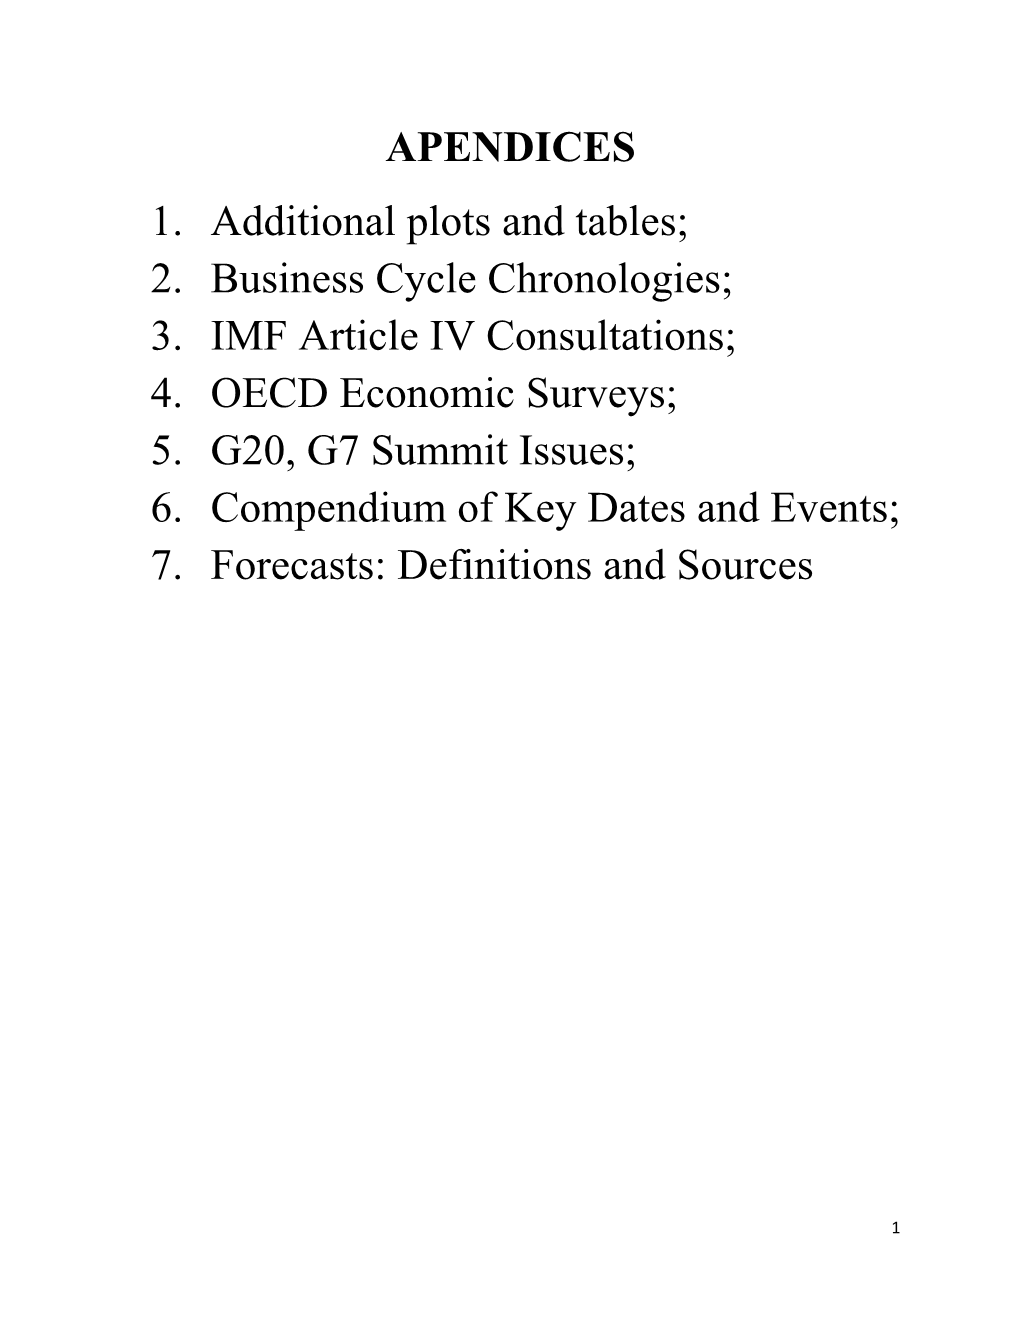 3. IMF Article IV Consultations; 4. OECD Economic Surveys; 5